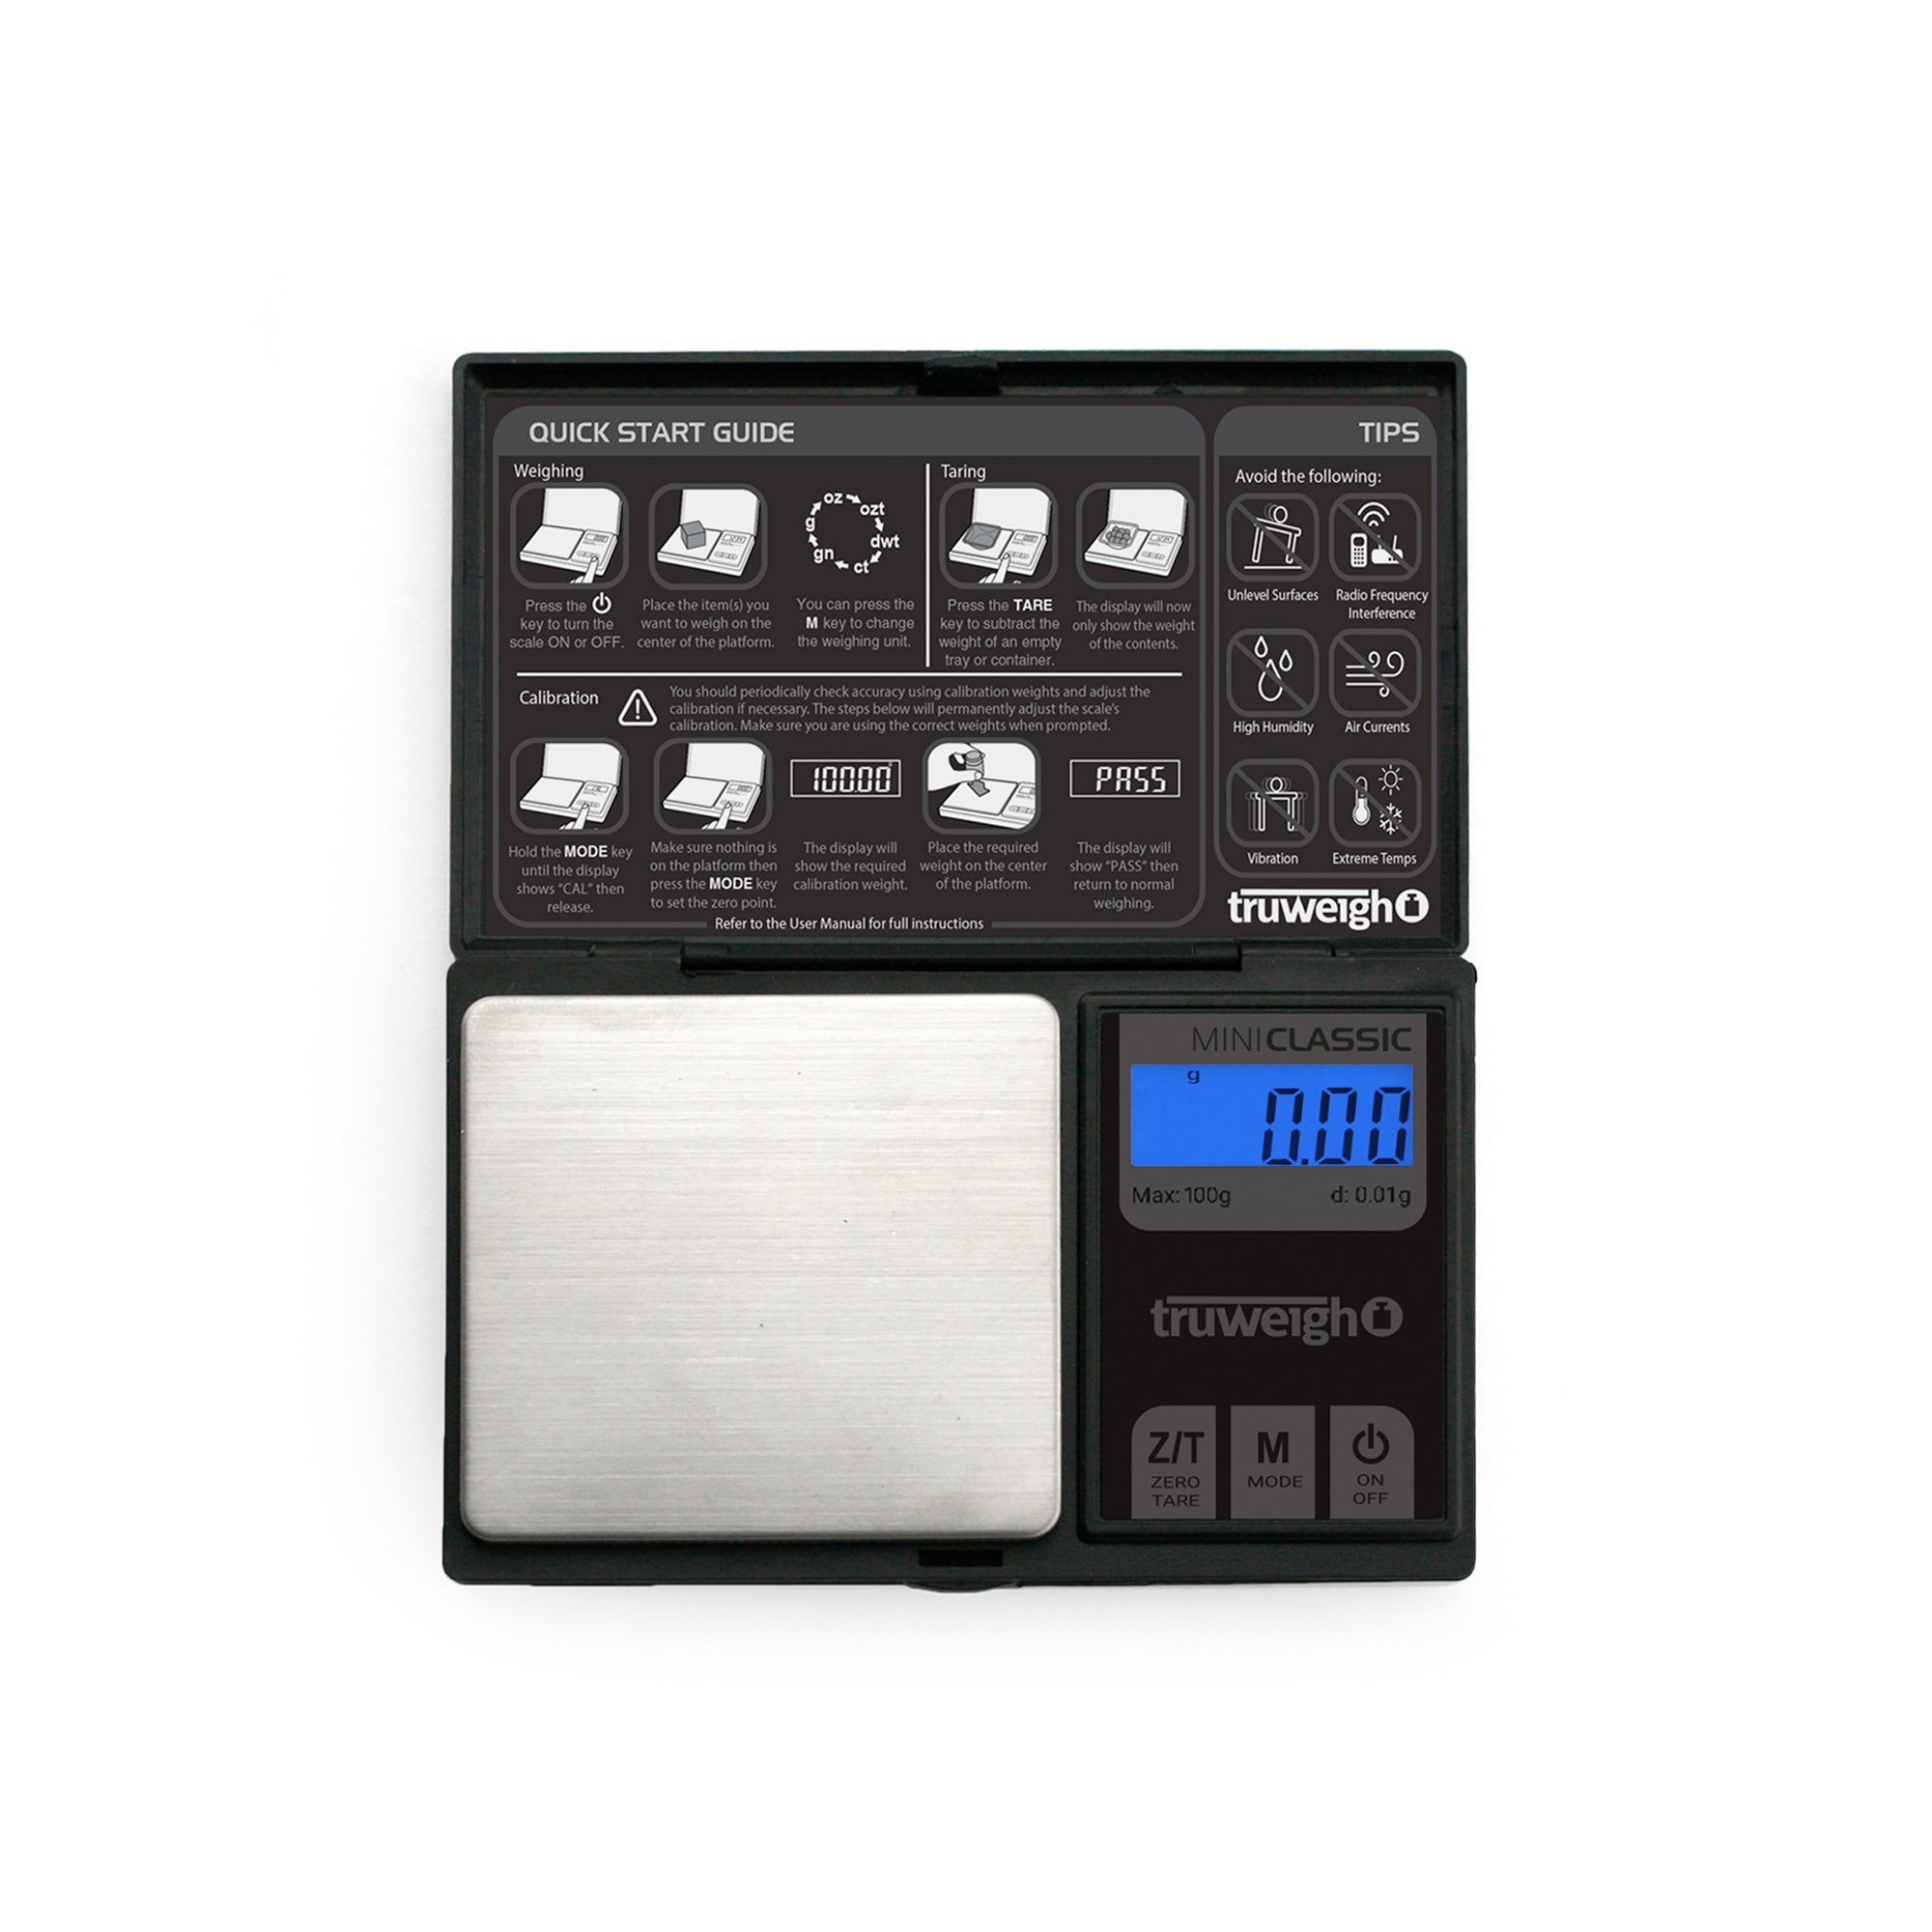 Mini Classic Digital Mini Scale 100g x 0.01g Black